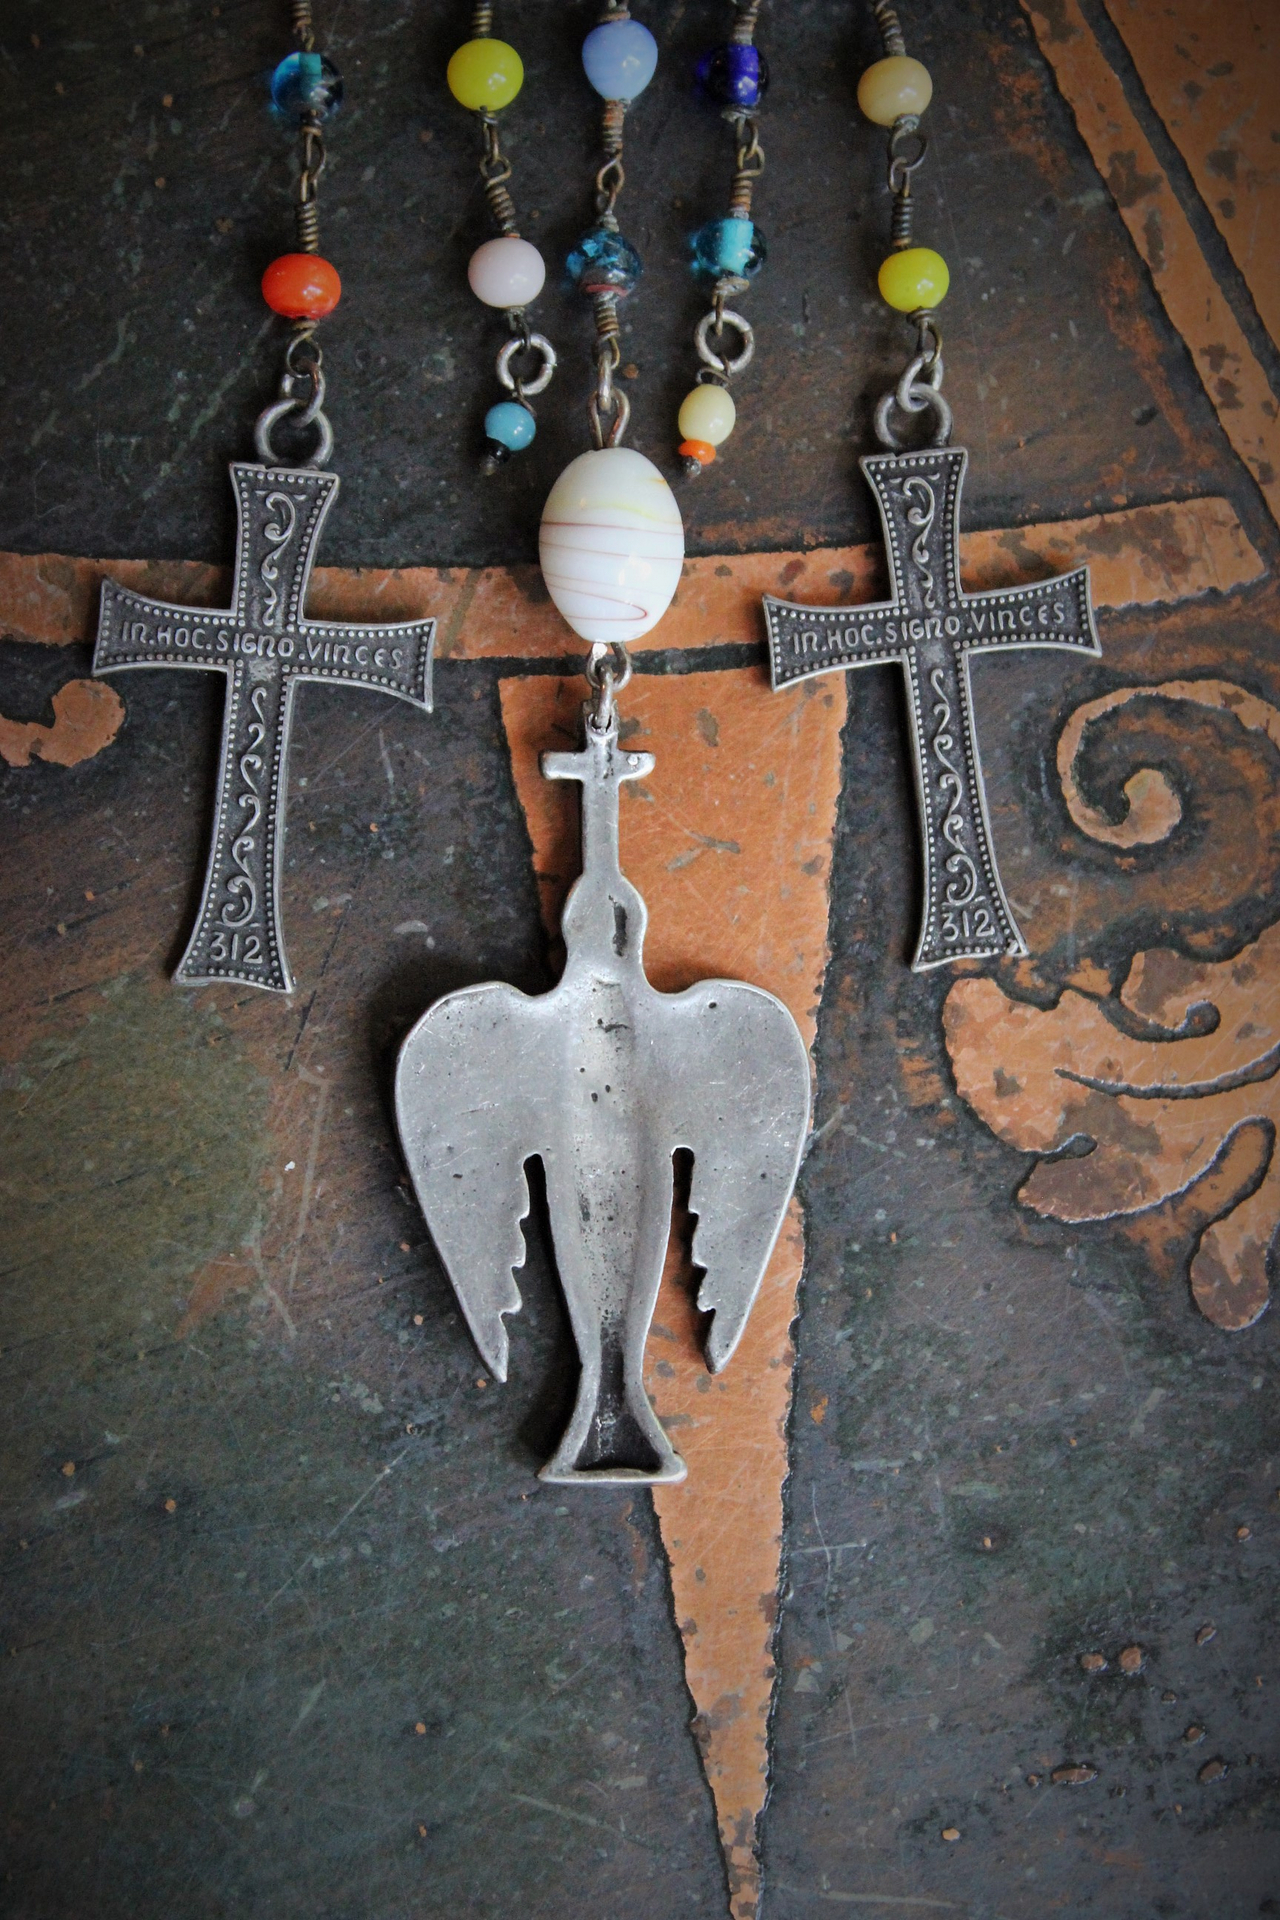 Peace Dove Necklace w/Antique Art Deco Mardi Gras Glass Bead Chain & Dangles,French Dove of Peace Pendant, French "Adveniat Regnum Tuum" (Thy Kingdom Come) Crosses